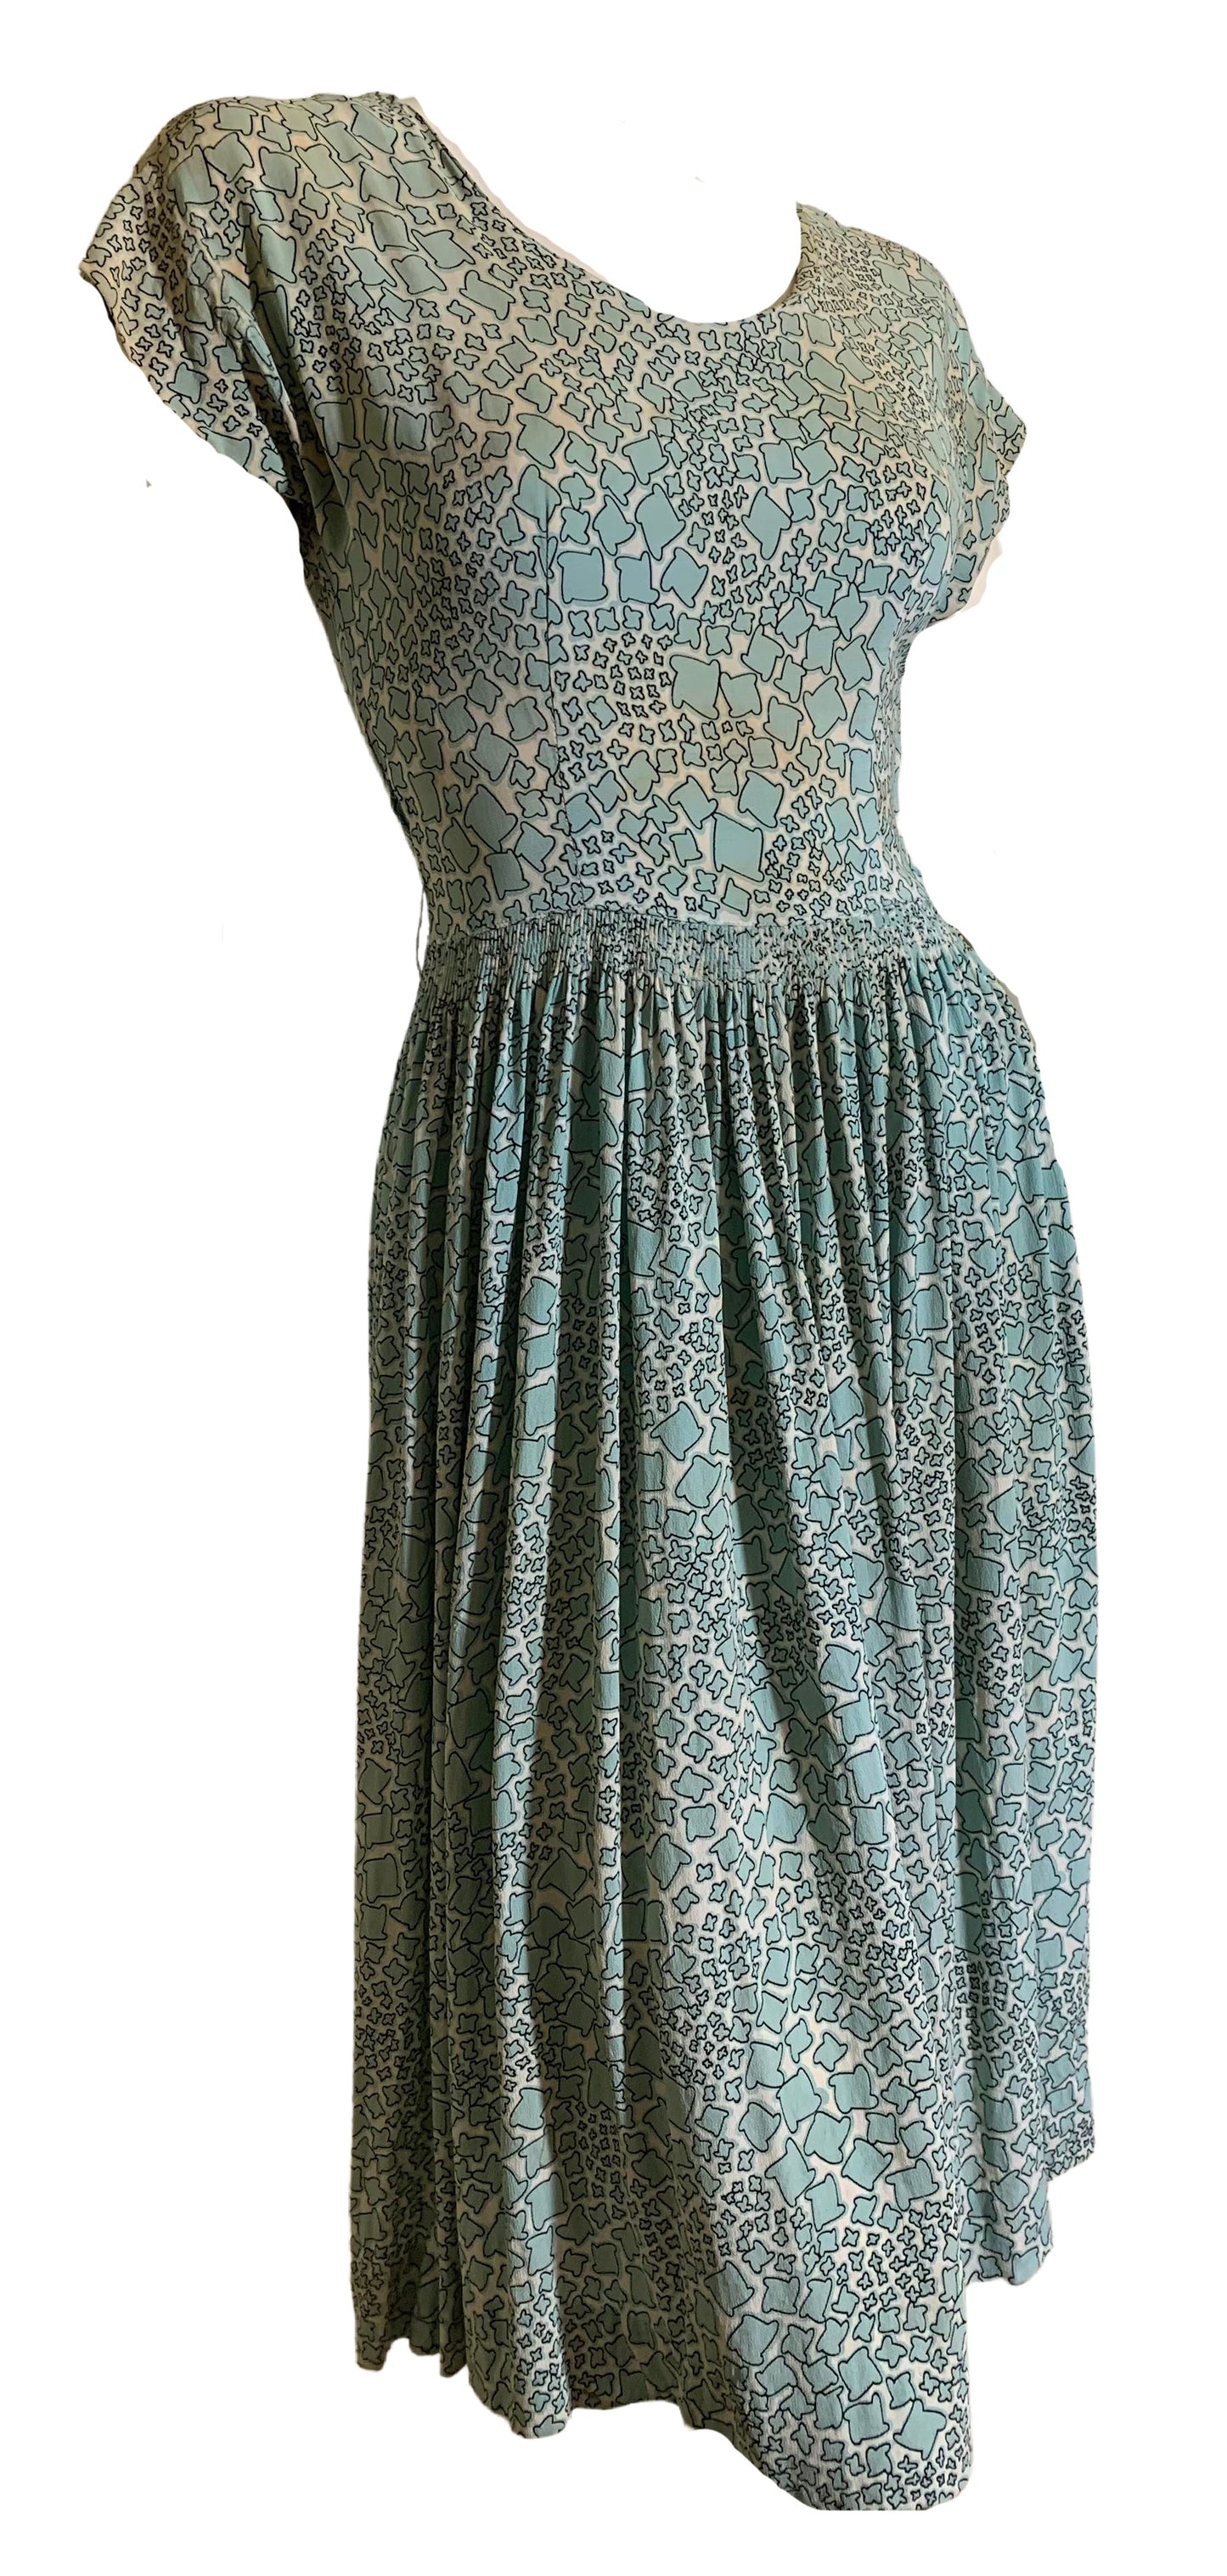 Mosaic Print Turquoise Print Dress circa 1940s